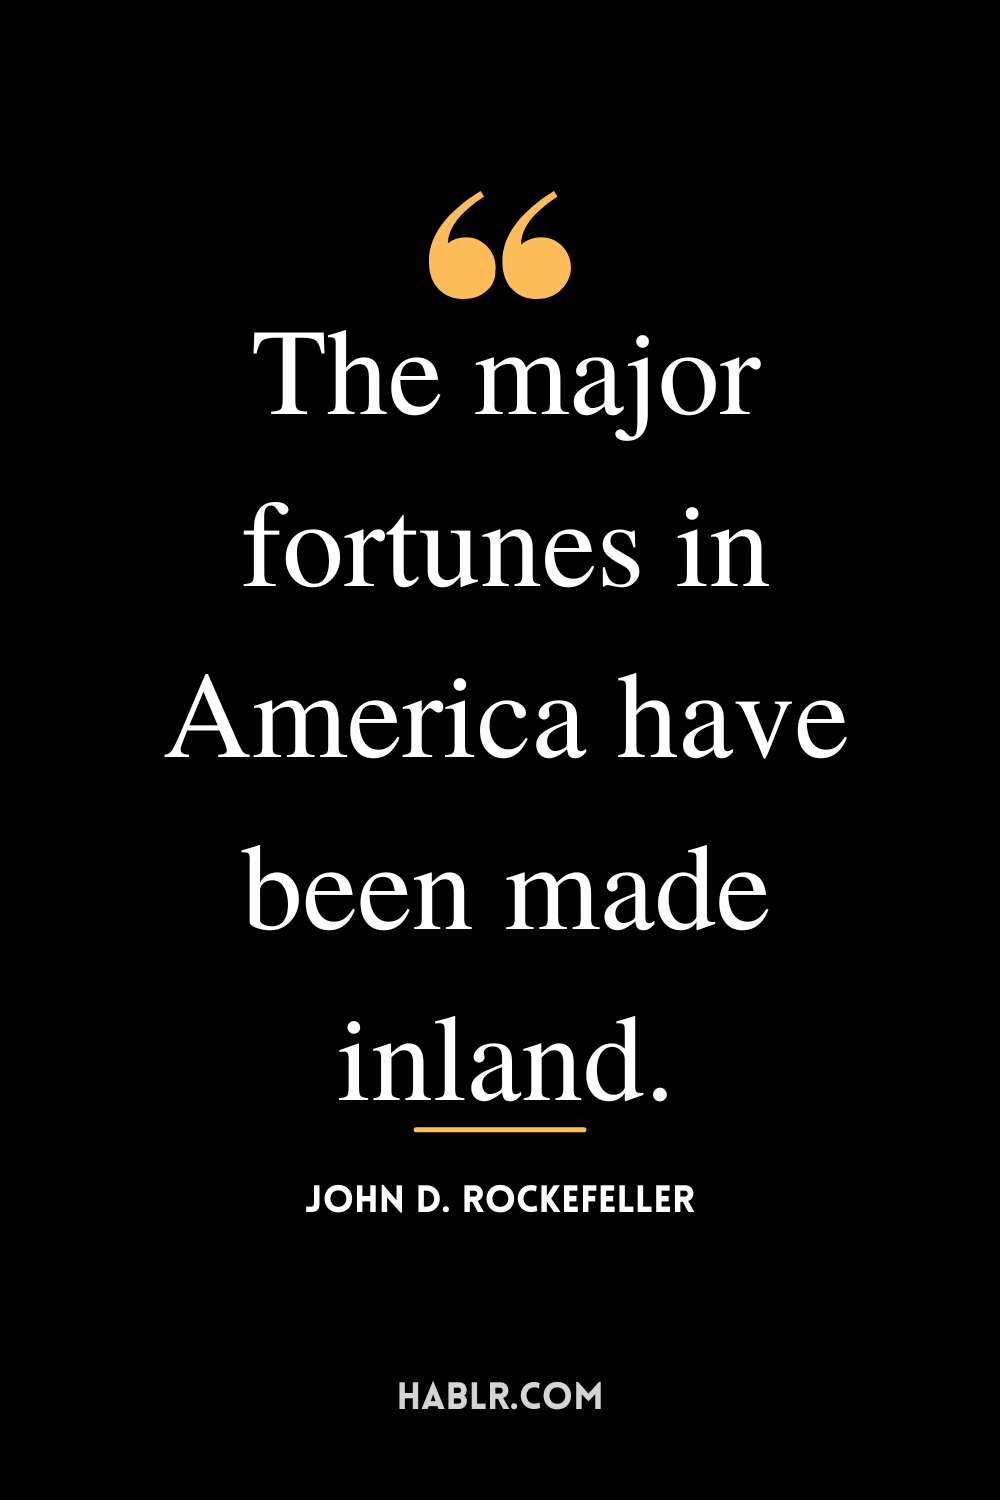 “The major fortunes in America have been made inland.” -John D. Rockefeller